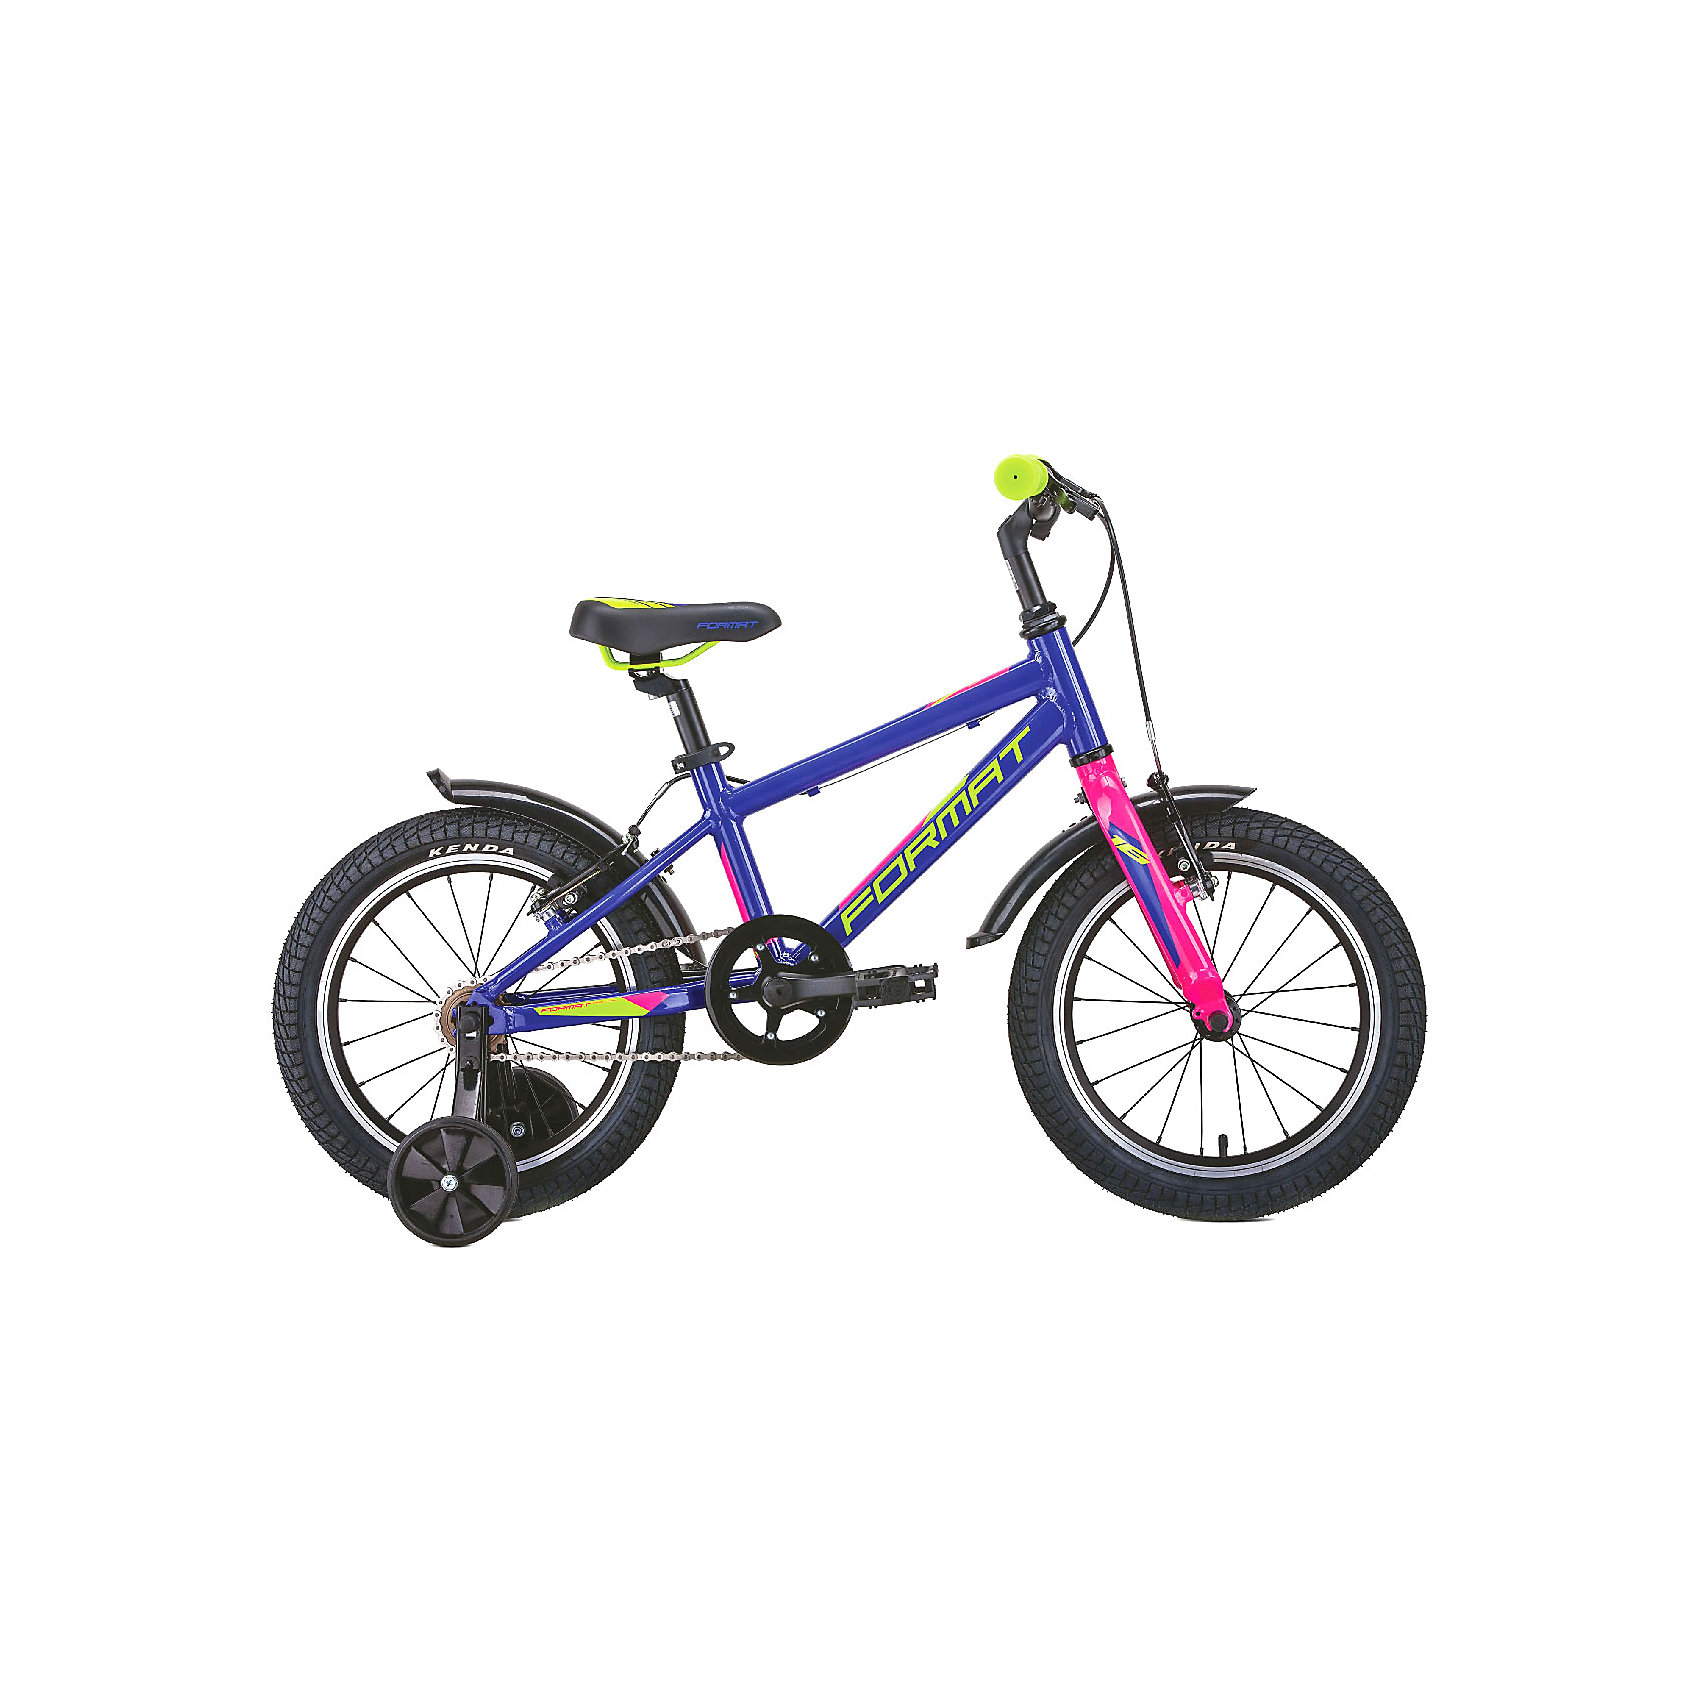 Велосипед format Kids 16 2020. Детский велосипед format Kids 18. Детский велосипед format Kids 16. Велосипед format Kids 20. Format kids 16